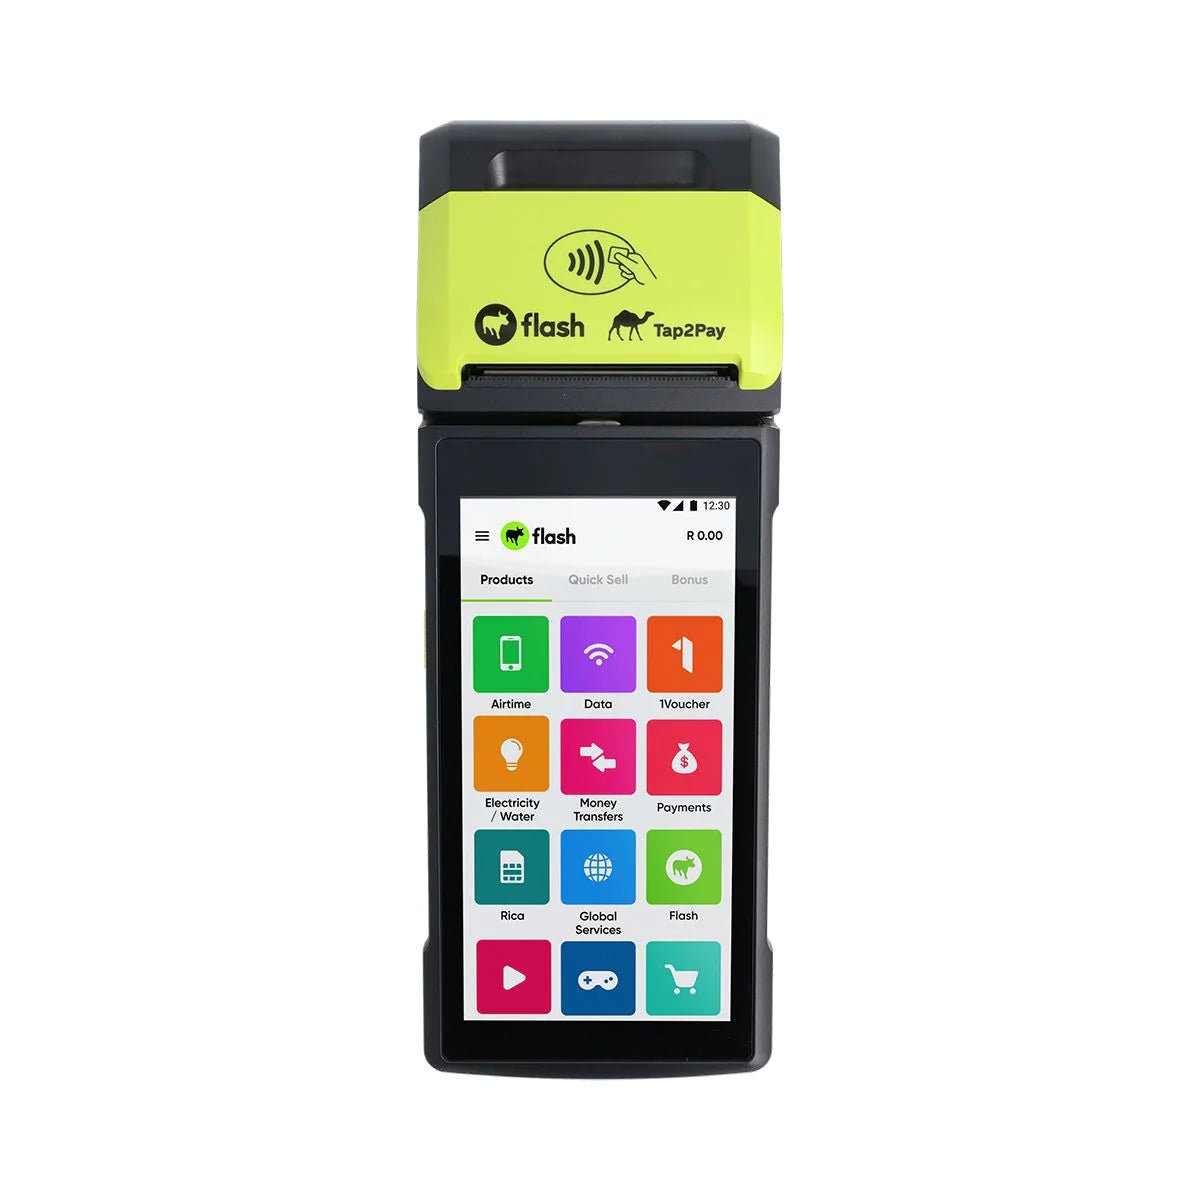 Flash TouchGo2 Mobile Vending Machine - MoneyCounters